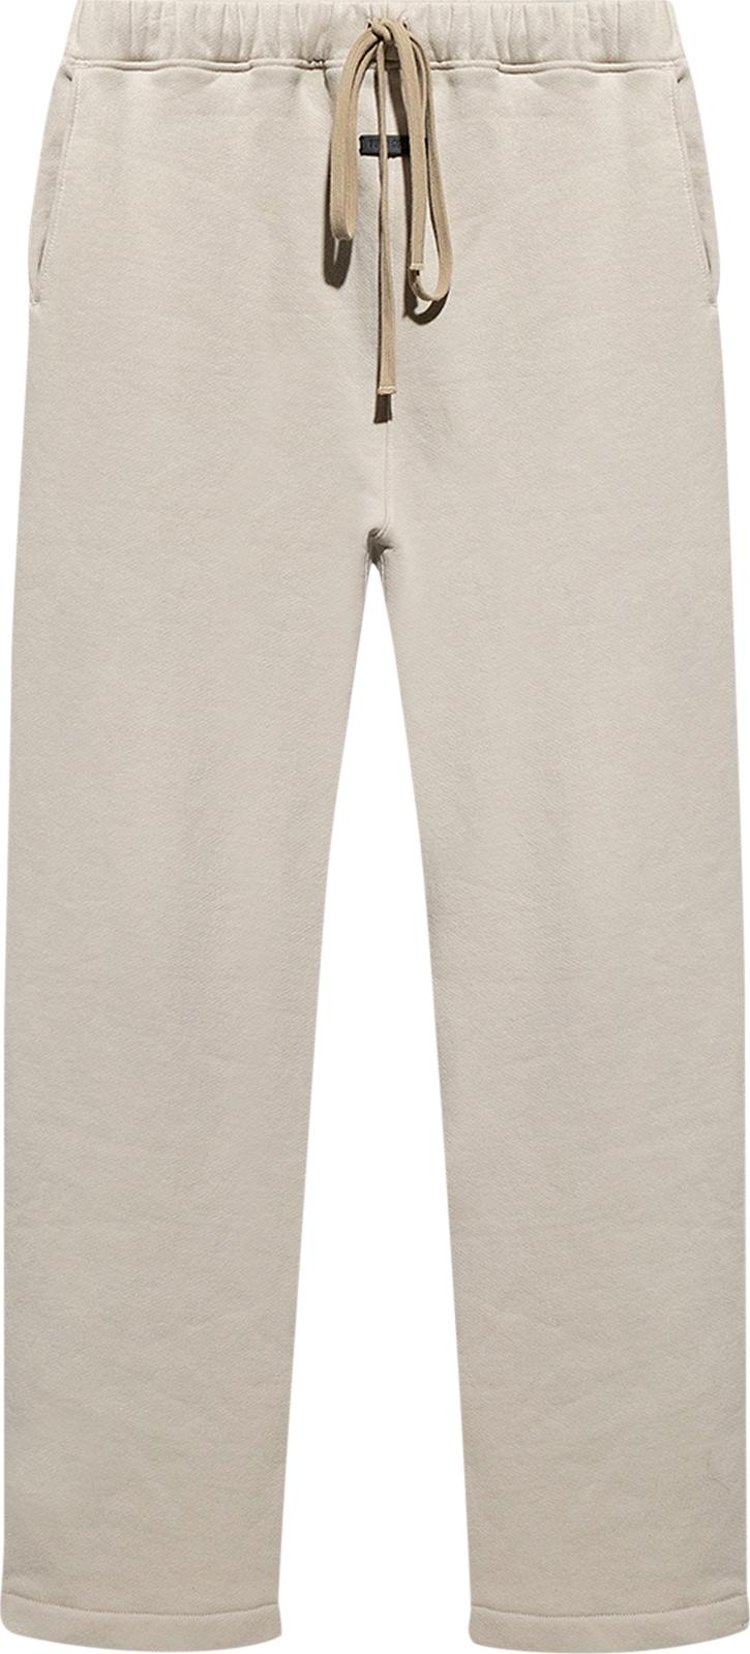 Спортивные брюки Fear of God Eternal Fleece Relaxed Sweatpant 'Cement', серый